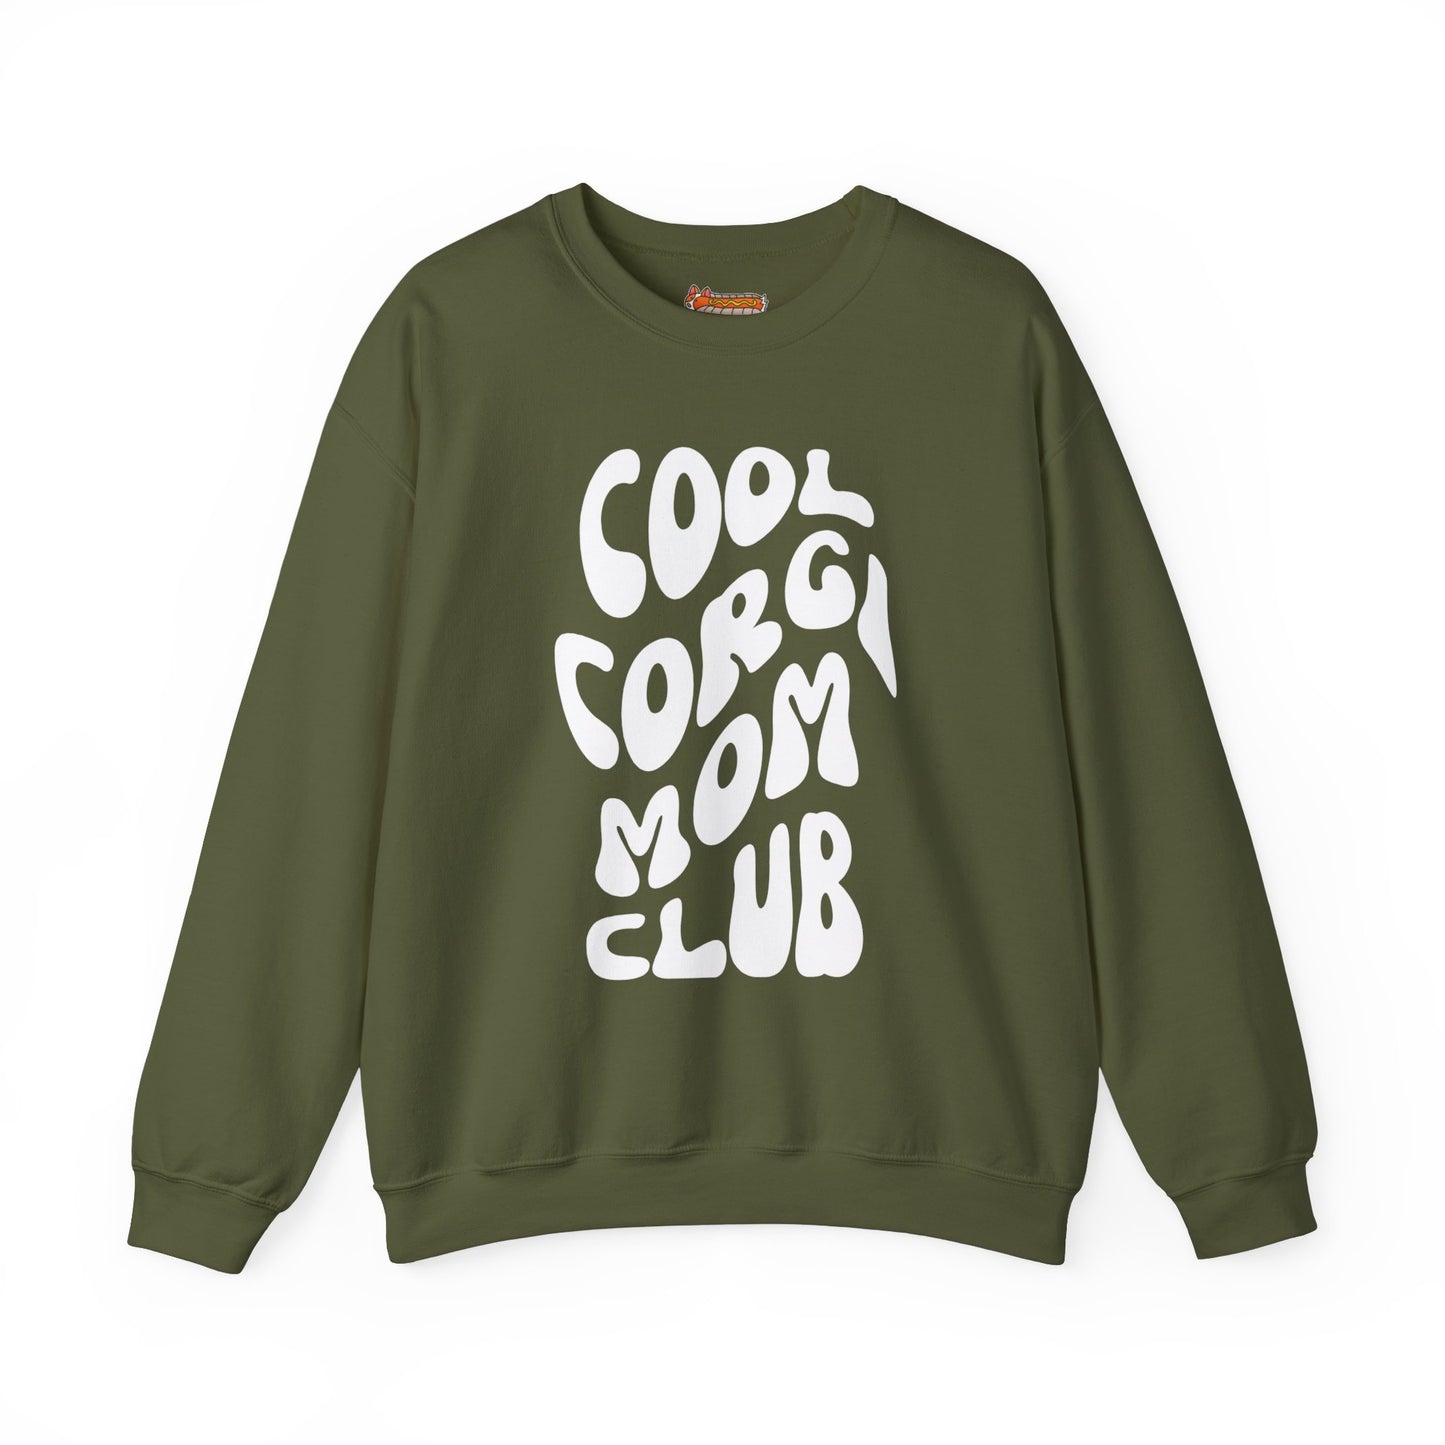 green olive army military corgi sweatshirt cool mom club trendy retro text dog lover gift for her women